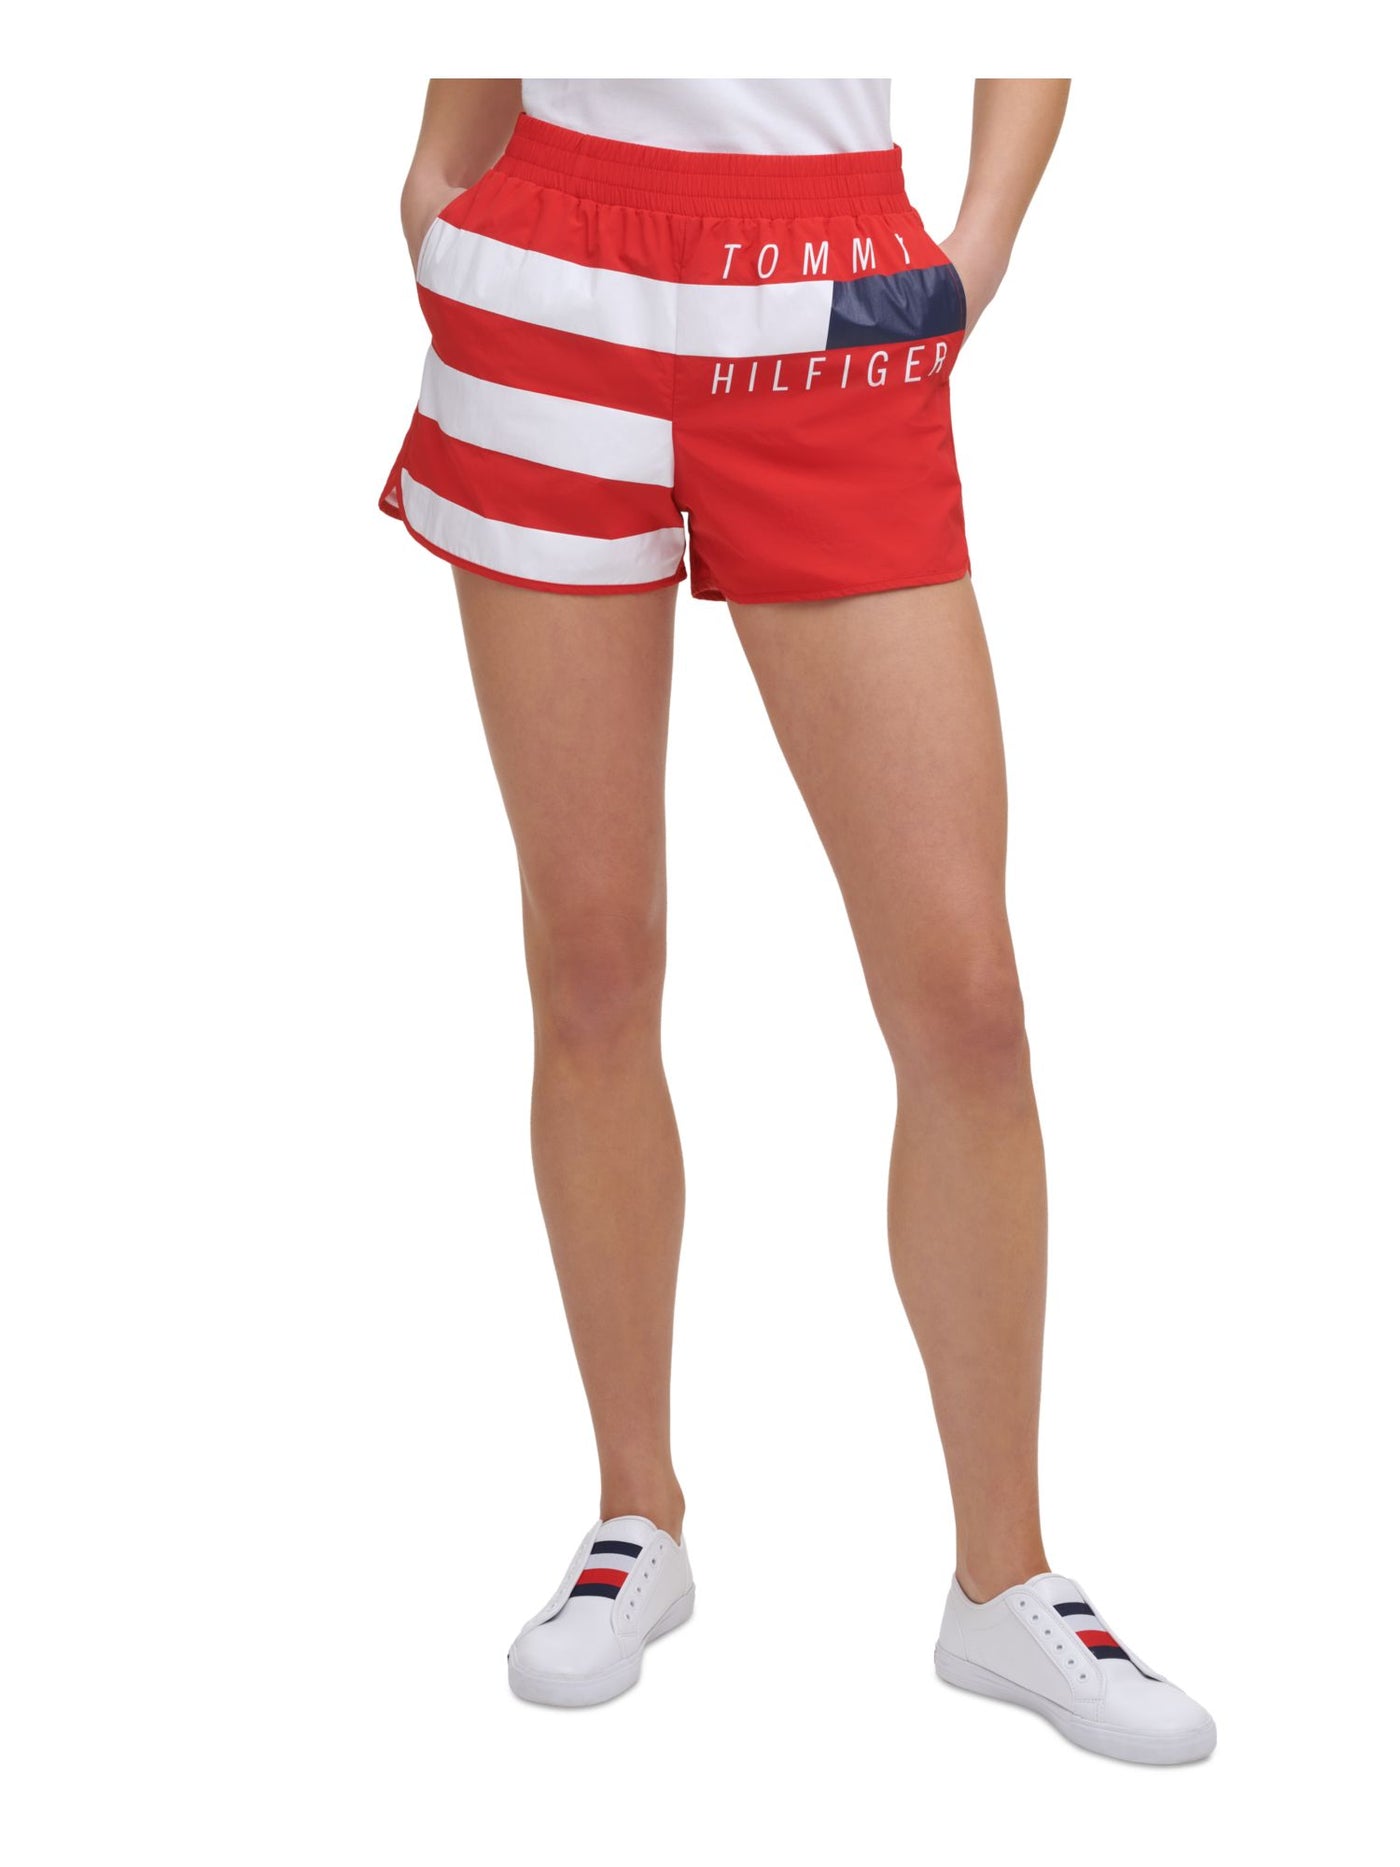 TOMMY HILFIGER SPORT Womens Red Stretch Pocketed Interior Briefs Elastic Waist Logo Graphic Active Wear Shorts S